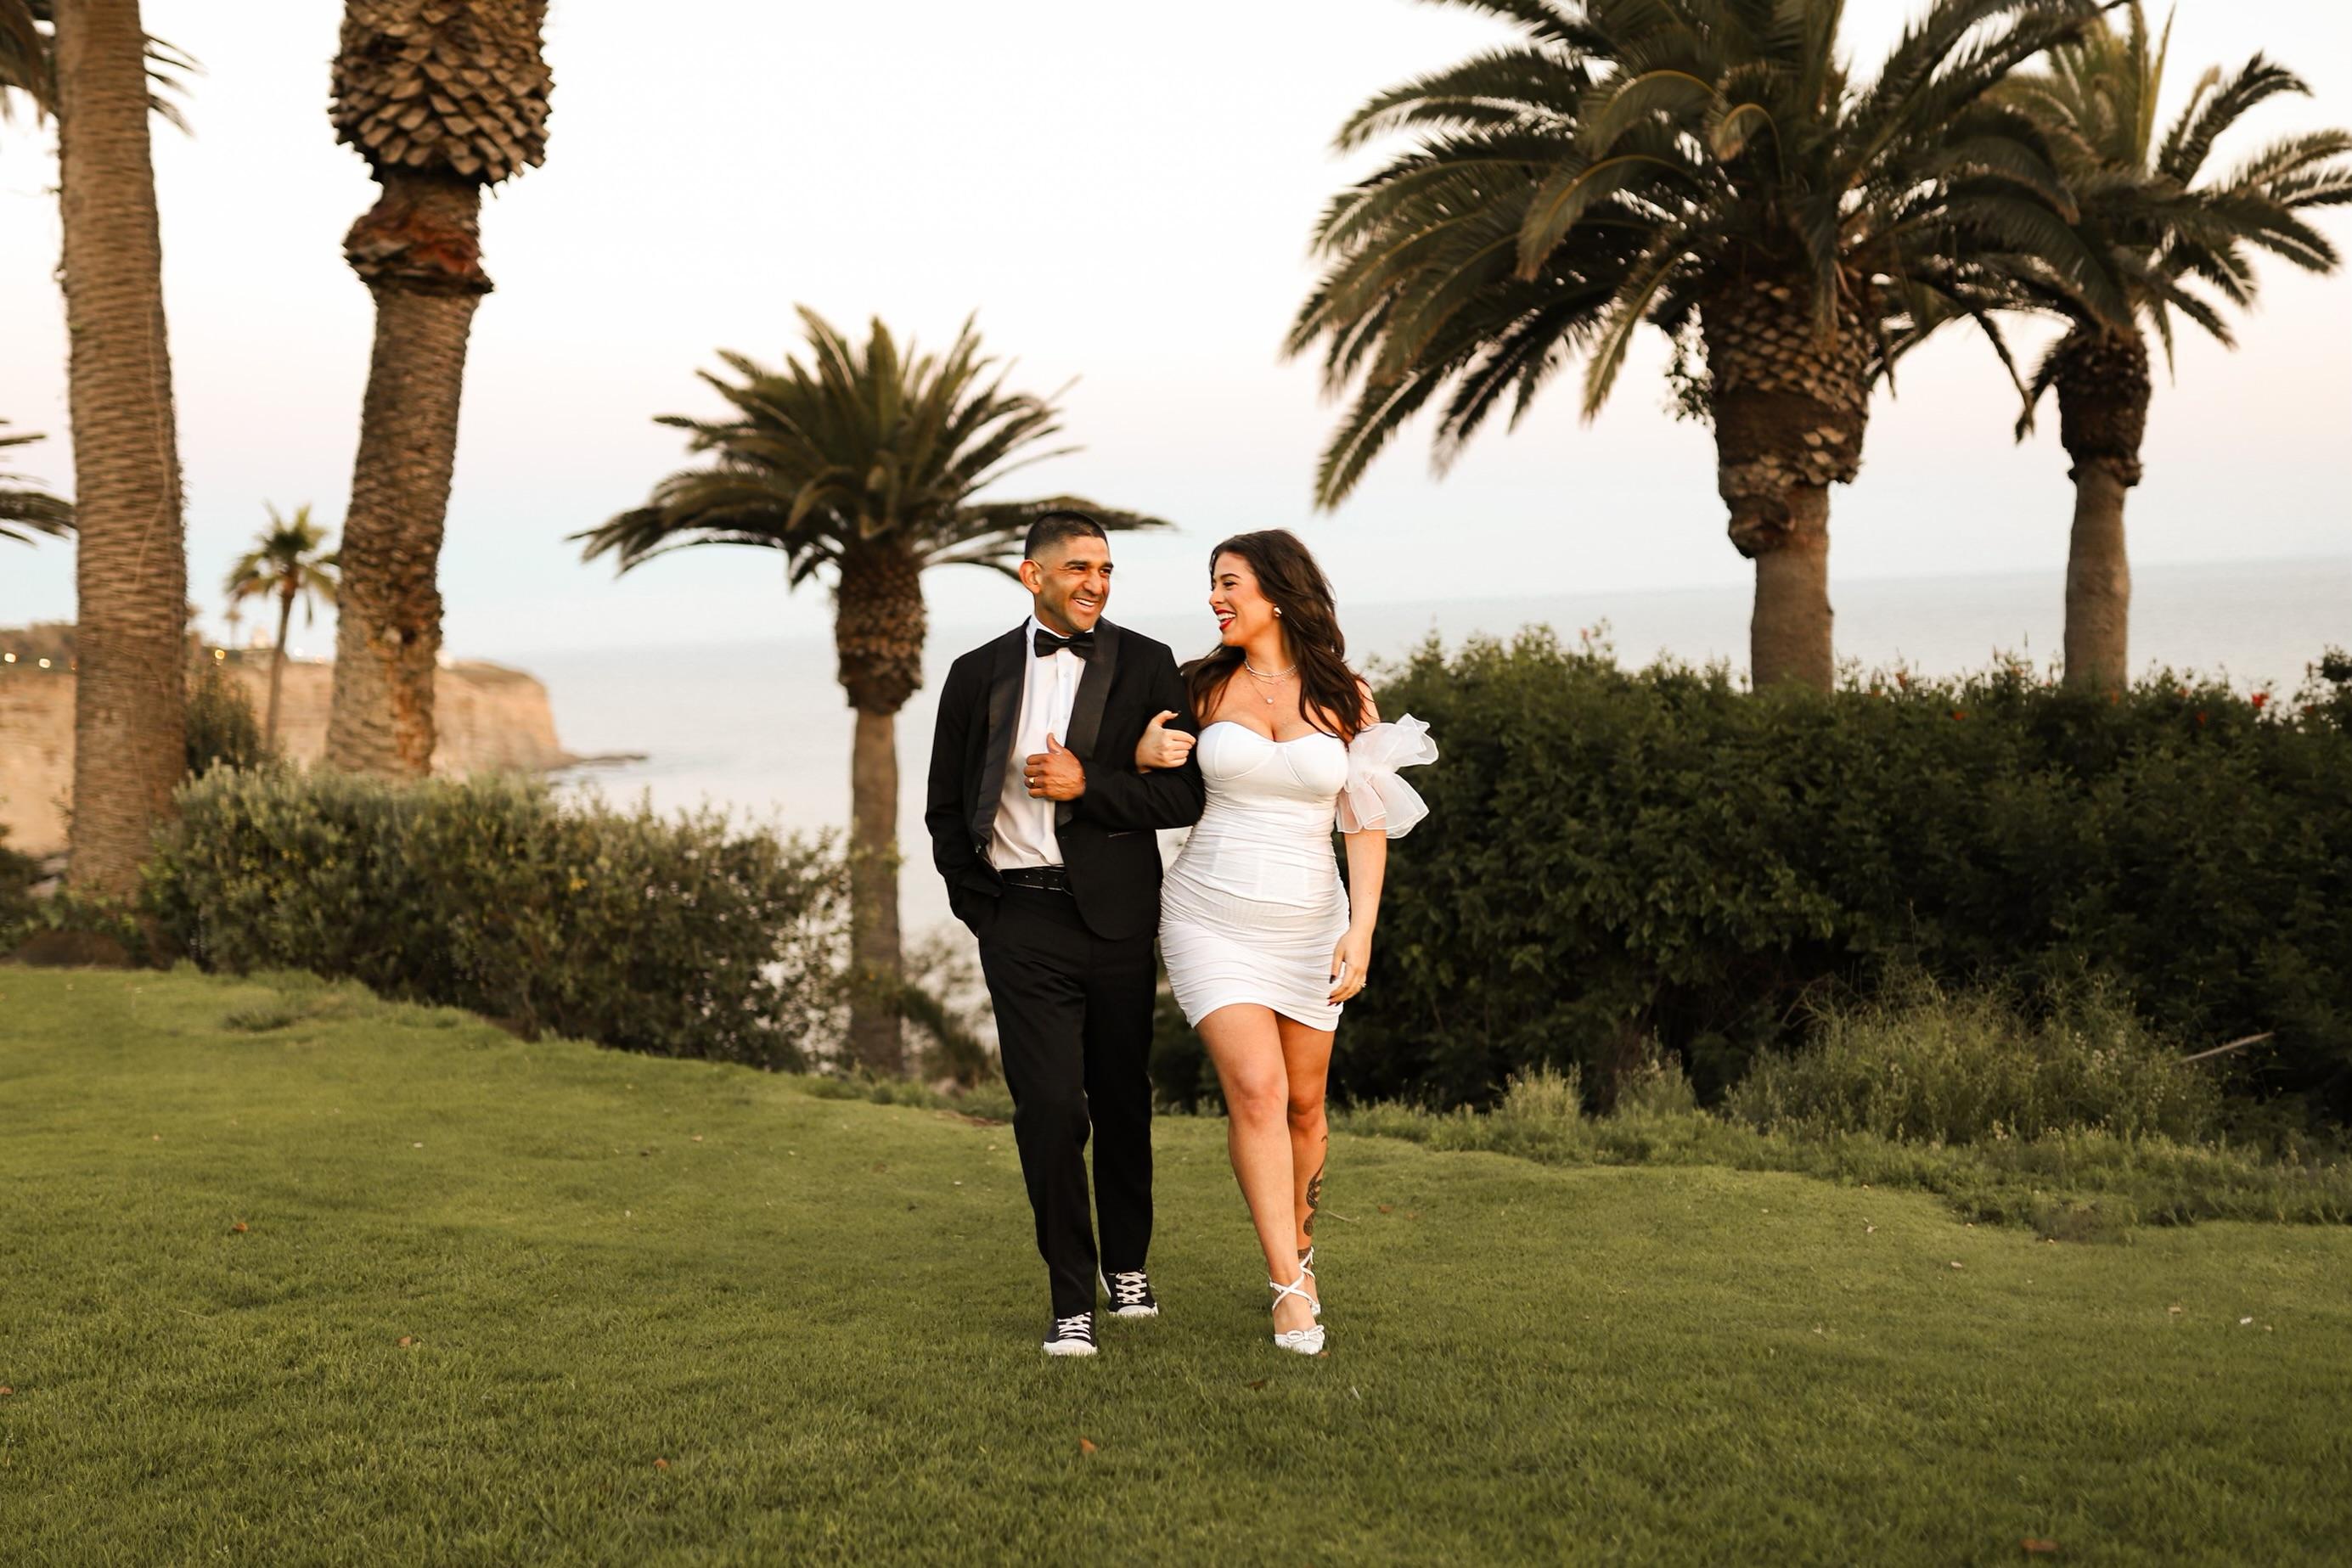 The Wedding Website of Nicole Pimentel and Jonathan Palomino